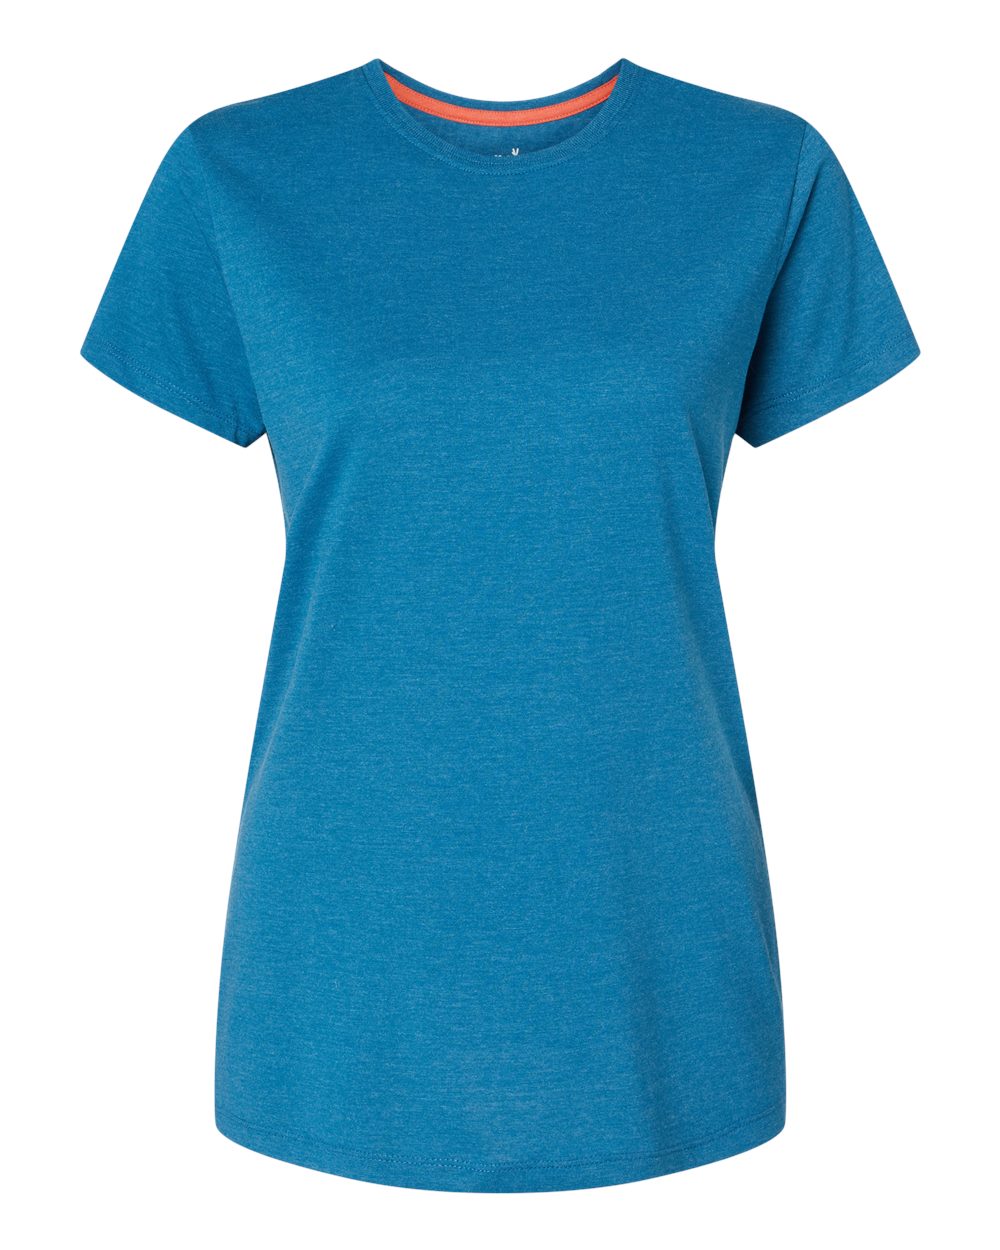 Customizable Kastlfel recycledsoft t-shirt women in blue